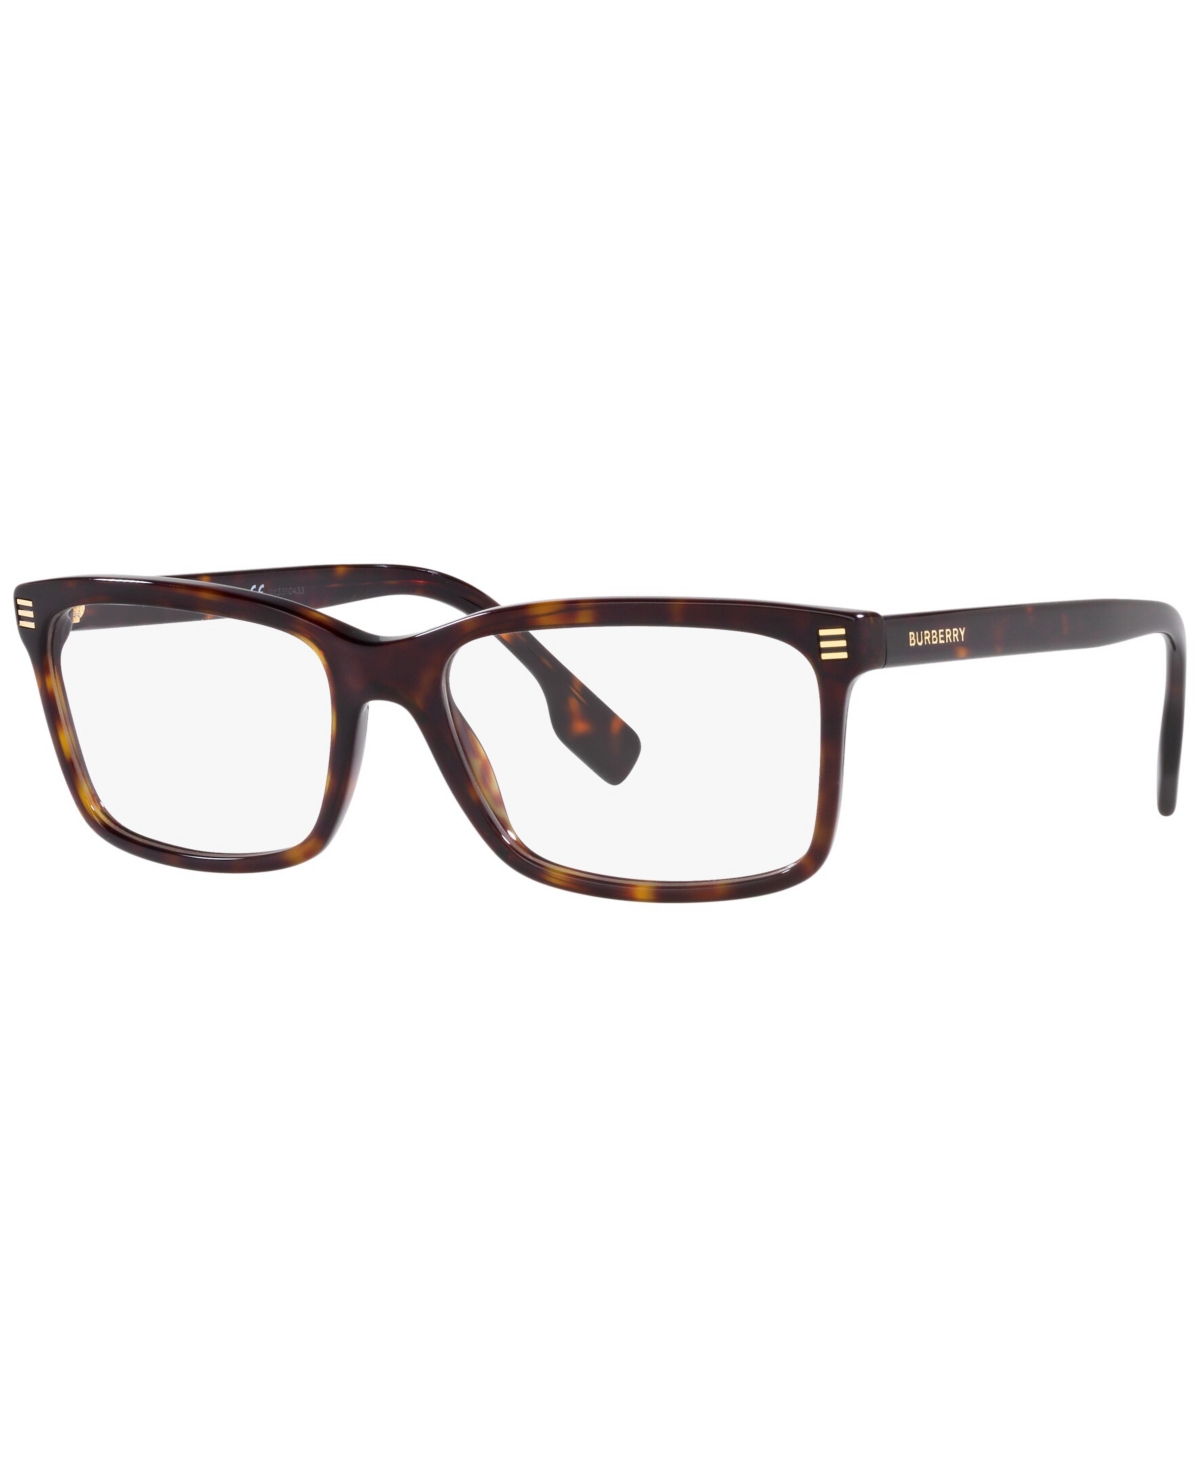 BE2352 Foster Men's Rectangle Eyeglasses - Dark Havana